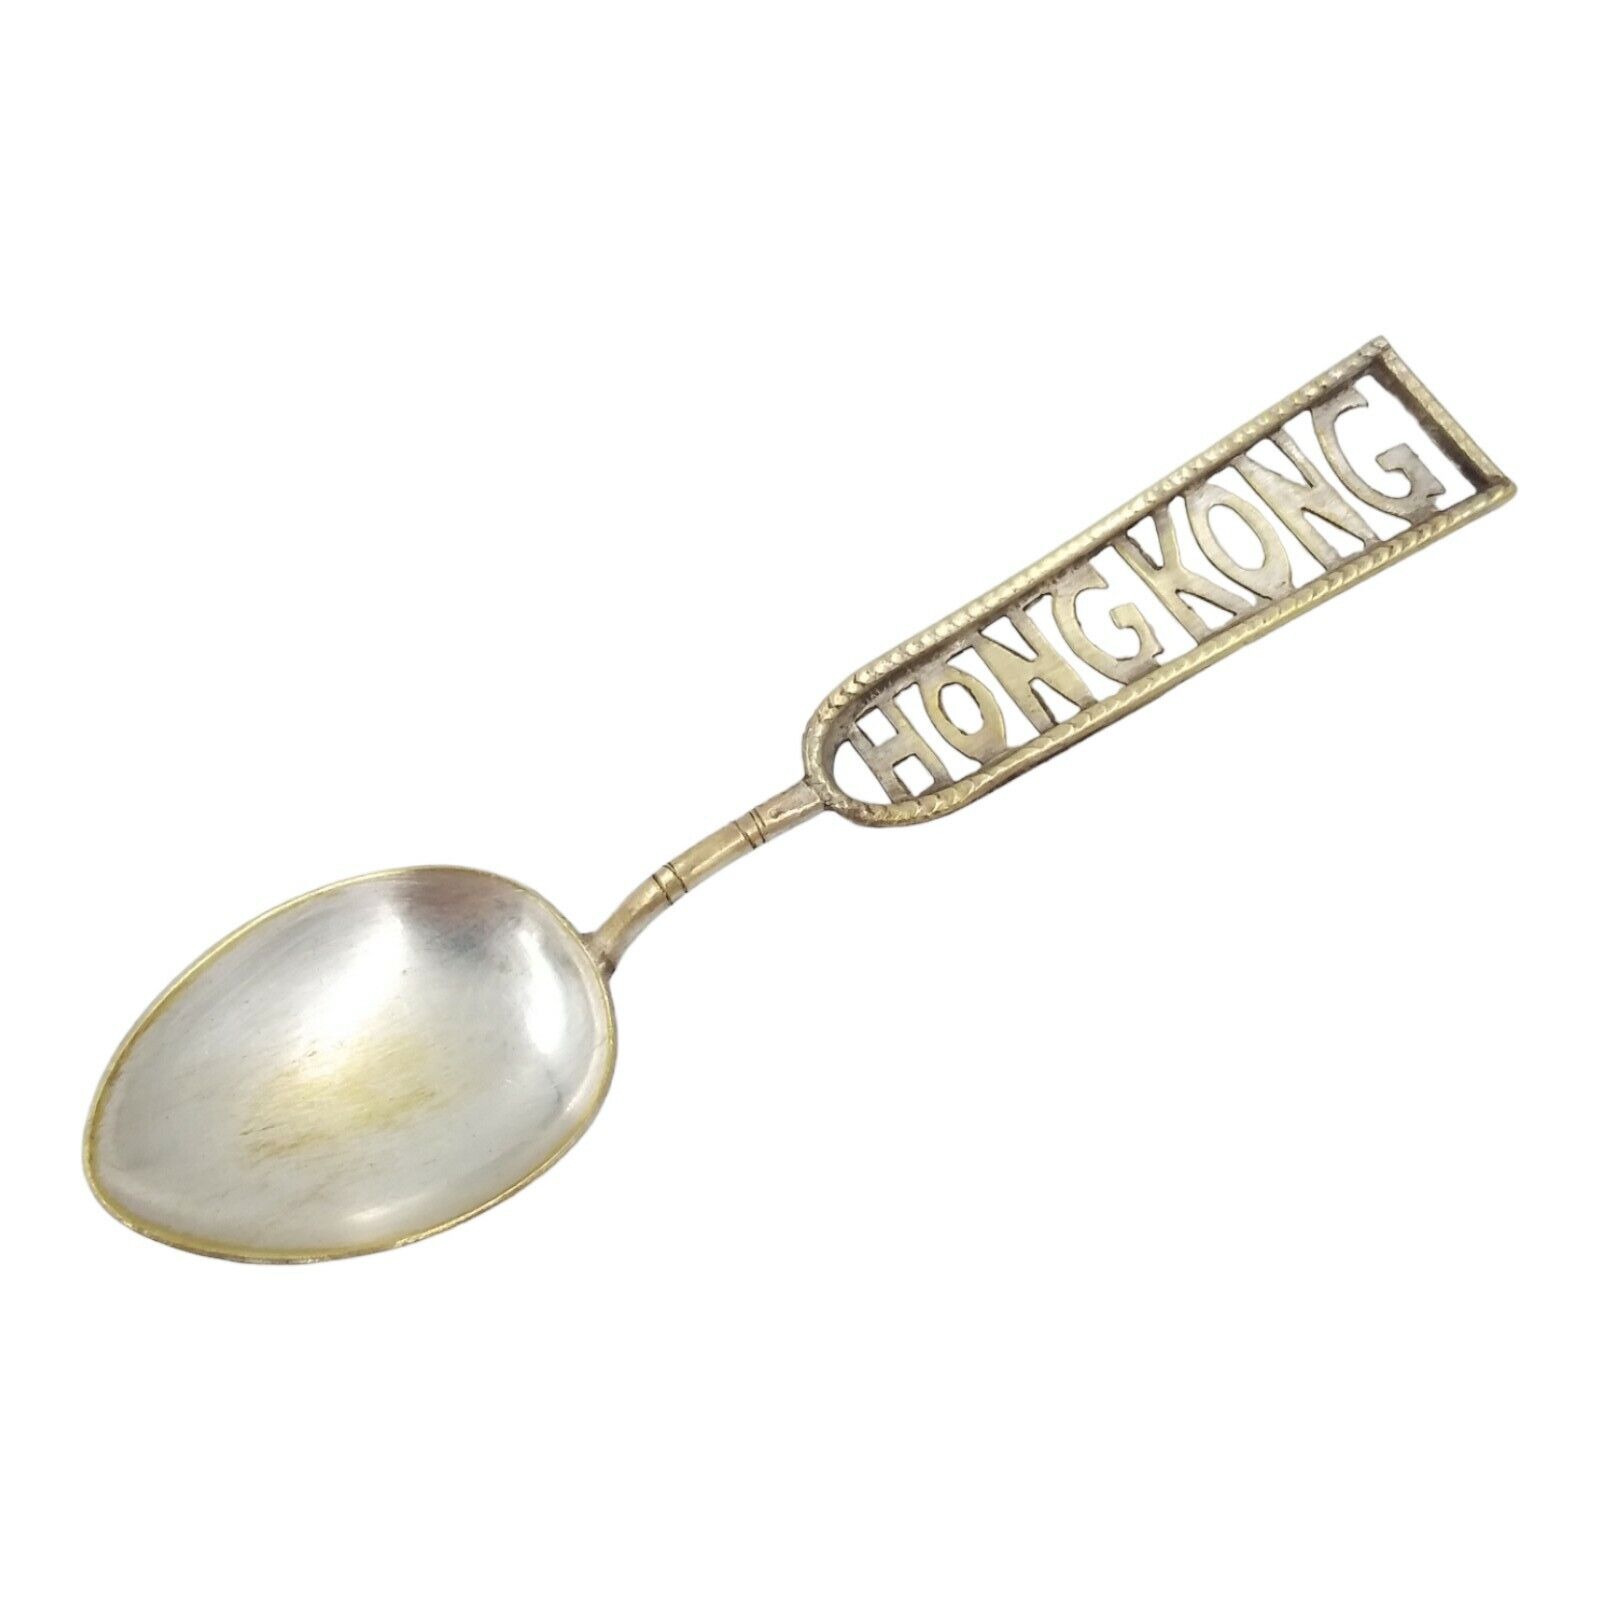 Vintage Hong Kong Souvenir Spoon Collectible Silverplate Cutout Pierced